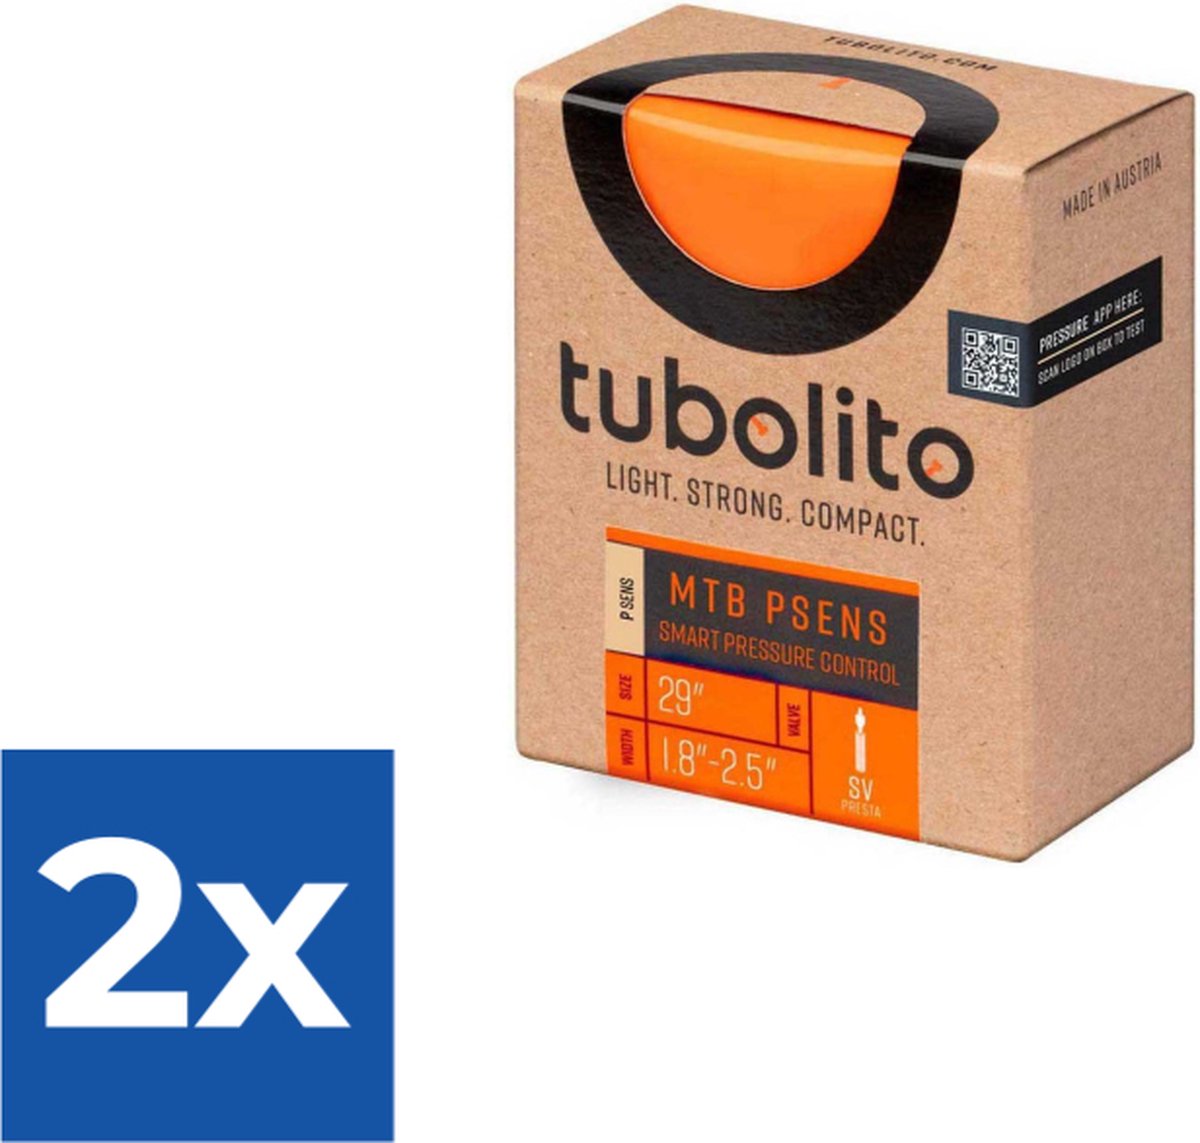 Tubolito binnenband Tubo MTB 29 x 1.8 - 2.5 PSENS fv 42mm - Voordeelverpakking 2 stuks